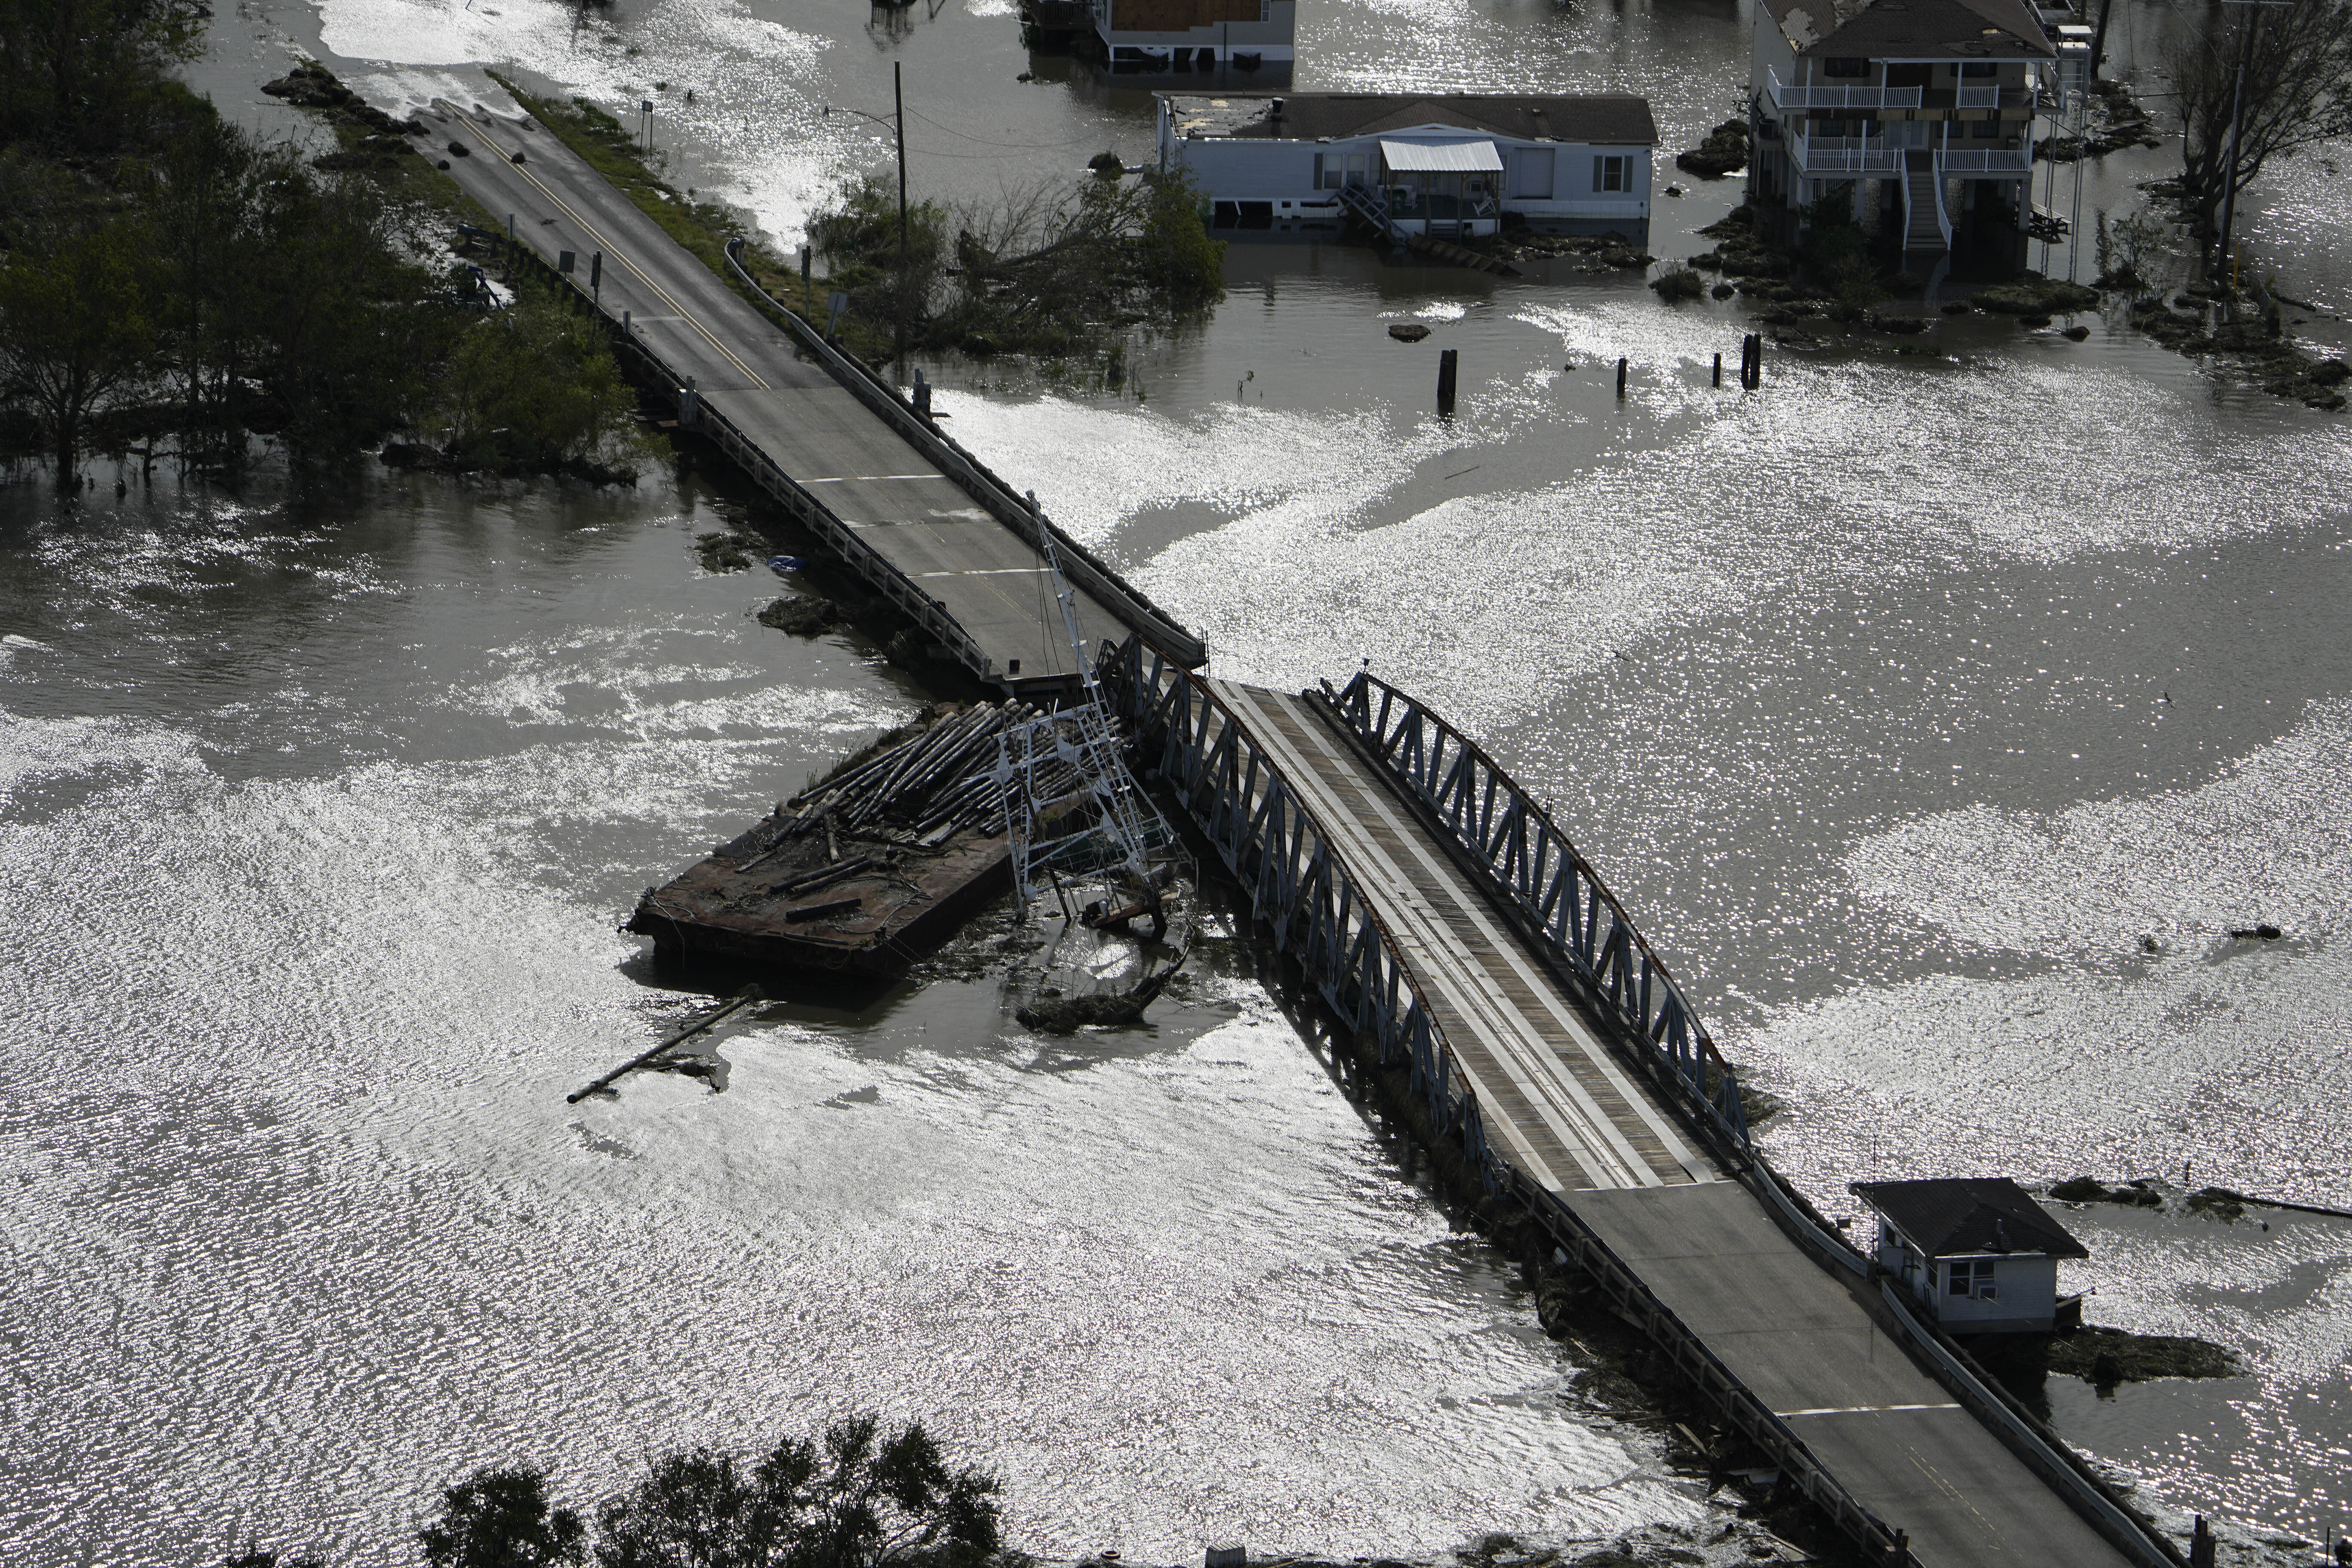 A barge damages a bridge that divides Lafitte, La., and Jean Lafitte, in the aftermath of Hurricane Ida, Monday, Aug. 30, 2021, in La. (AP Photo/David J. Phillip)